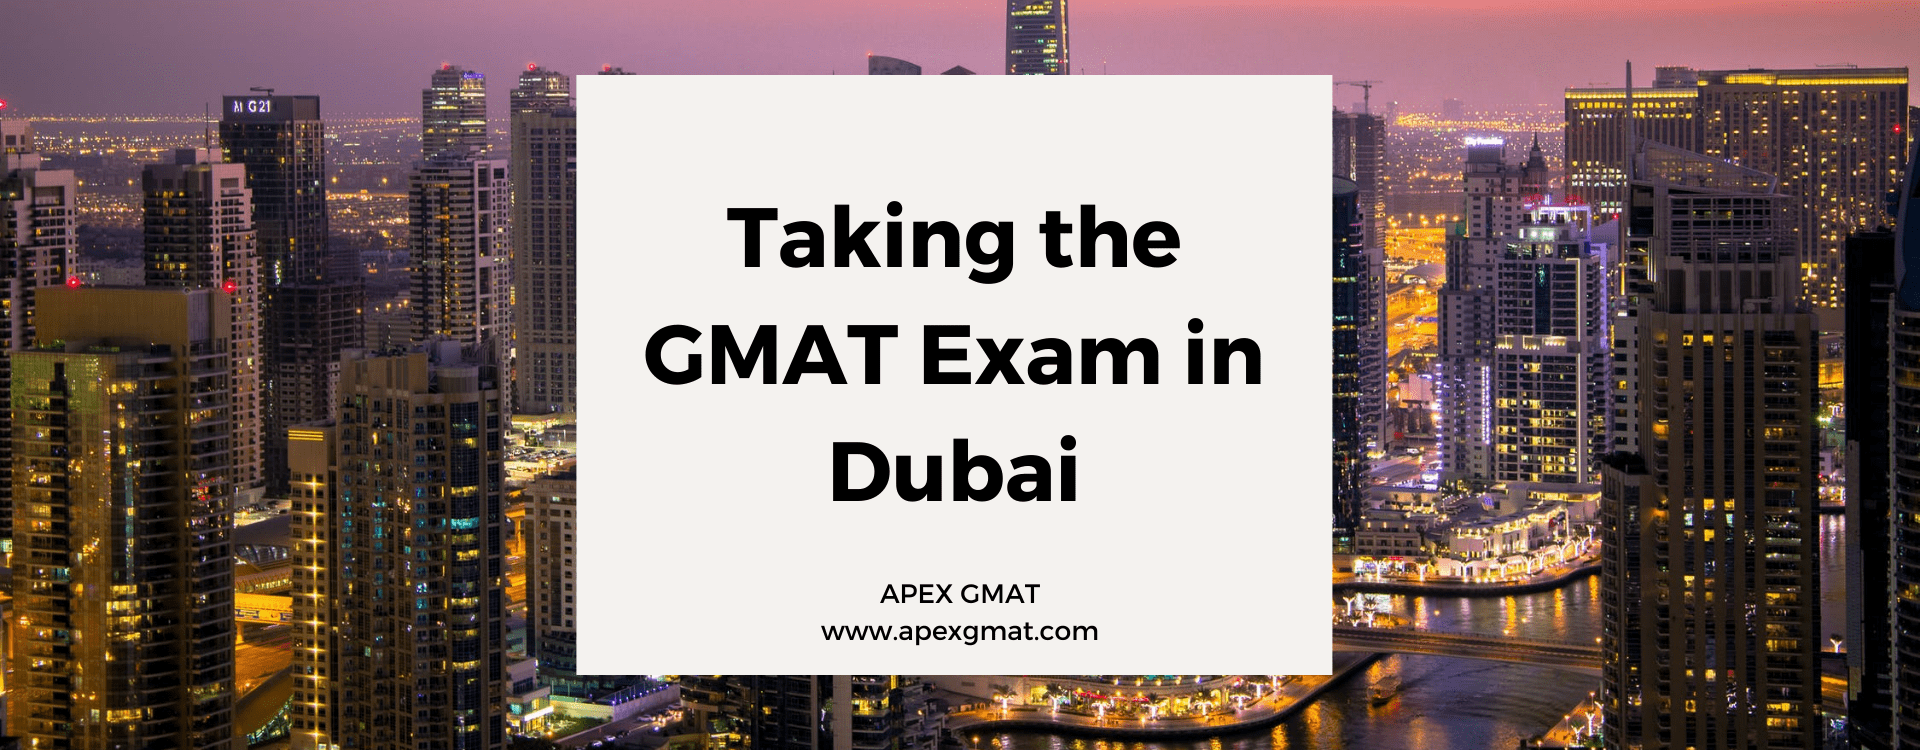 Taking the GMAT Exam in Dubai